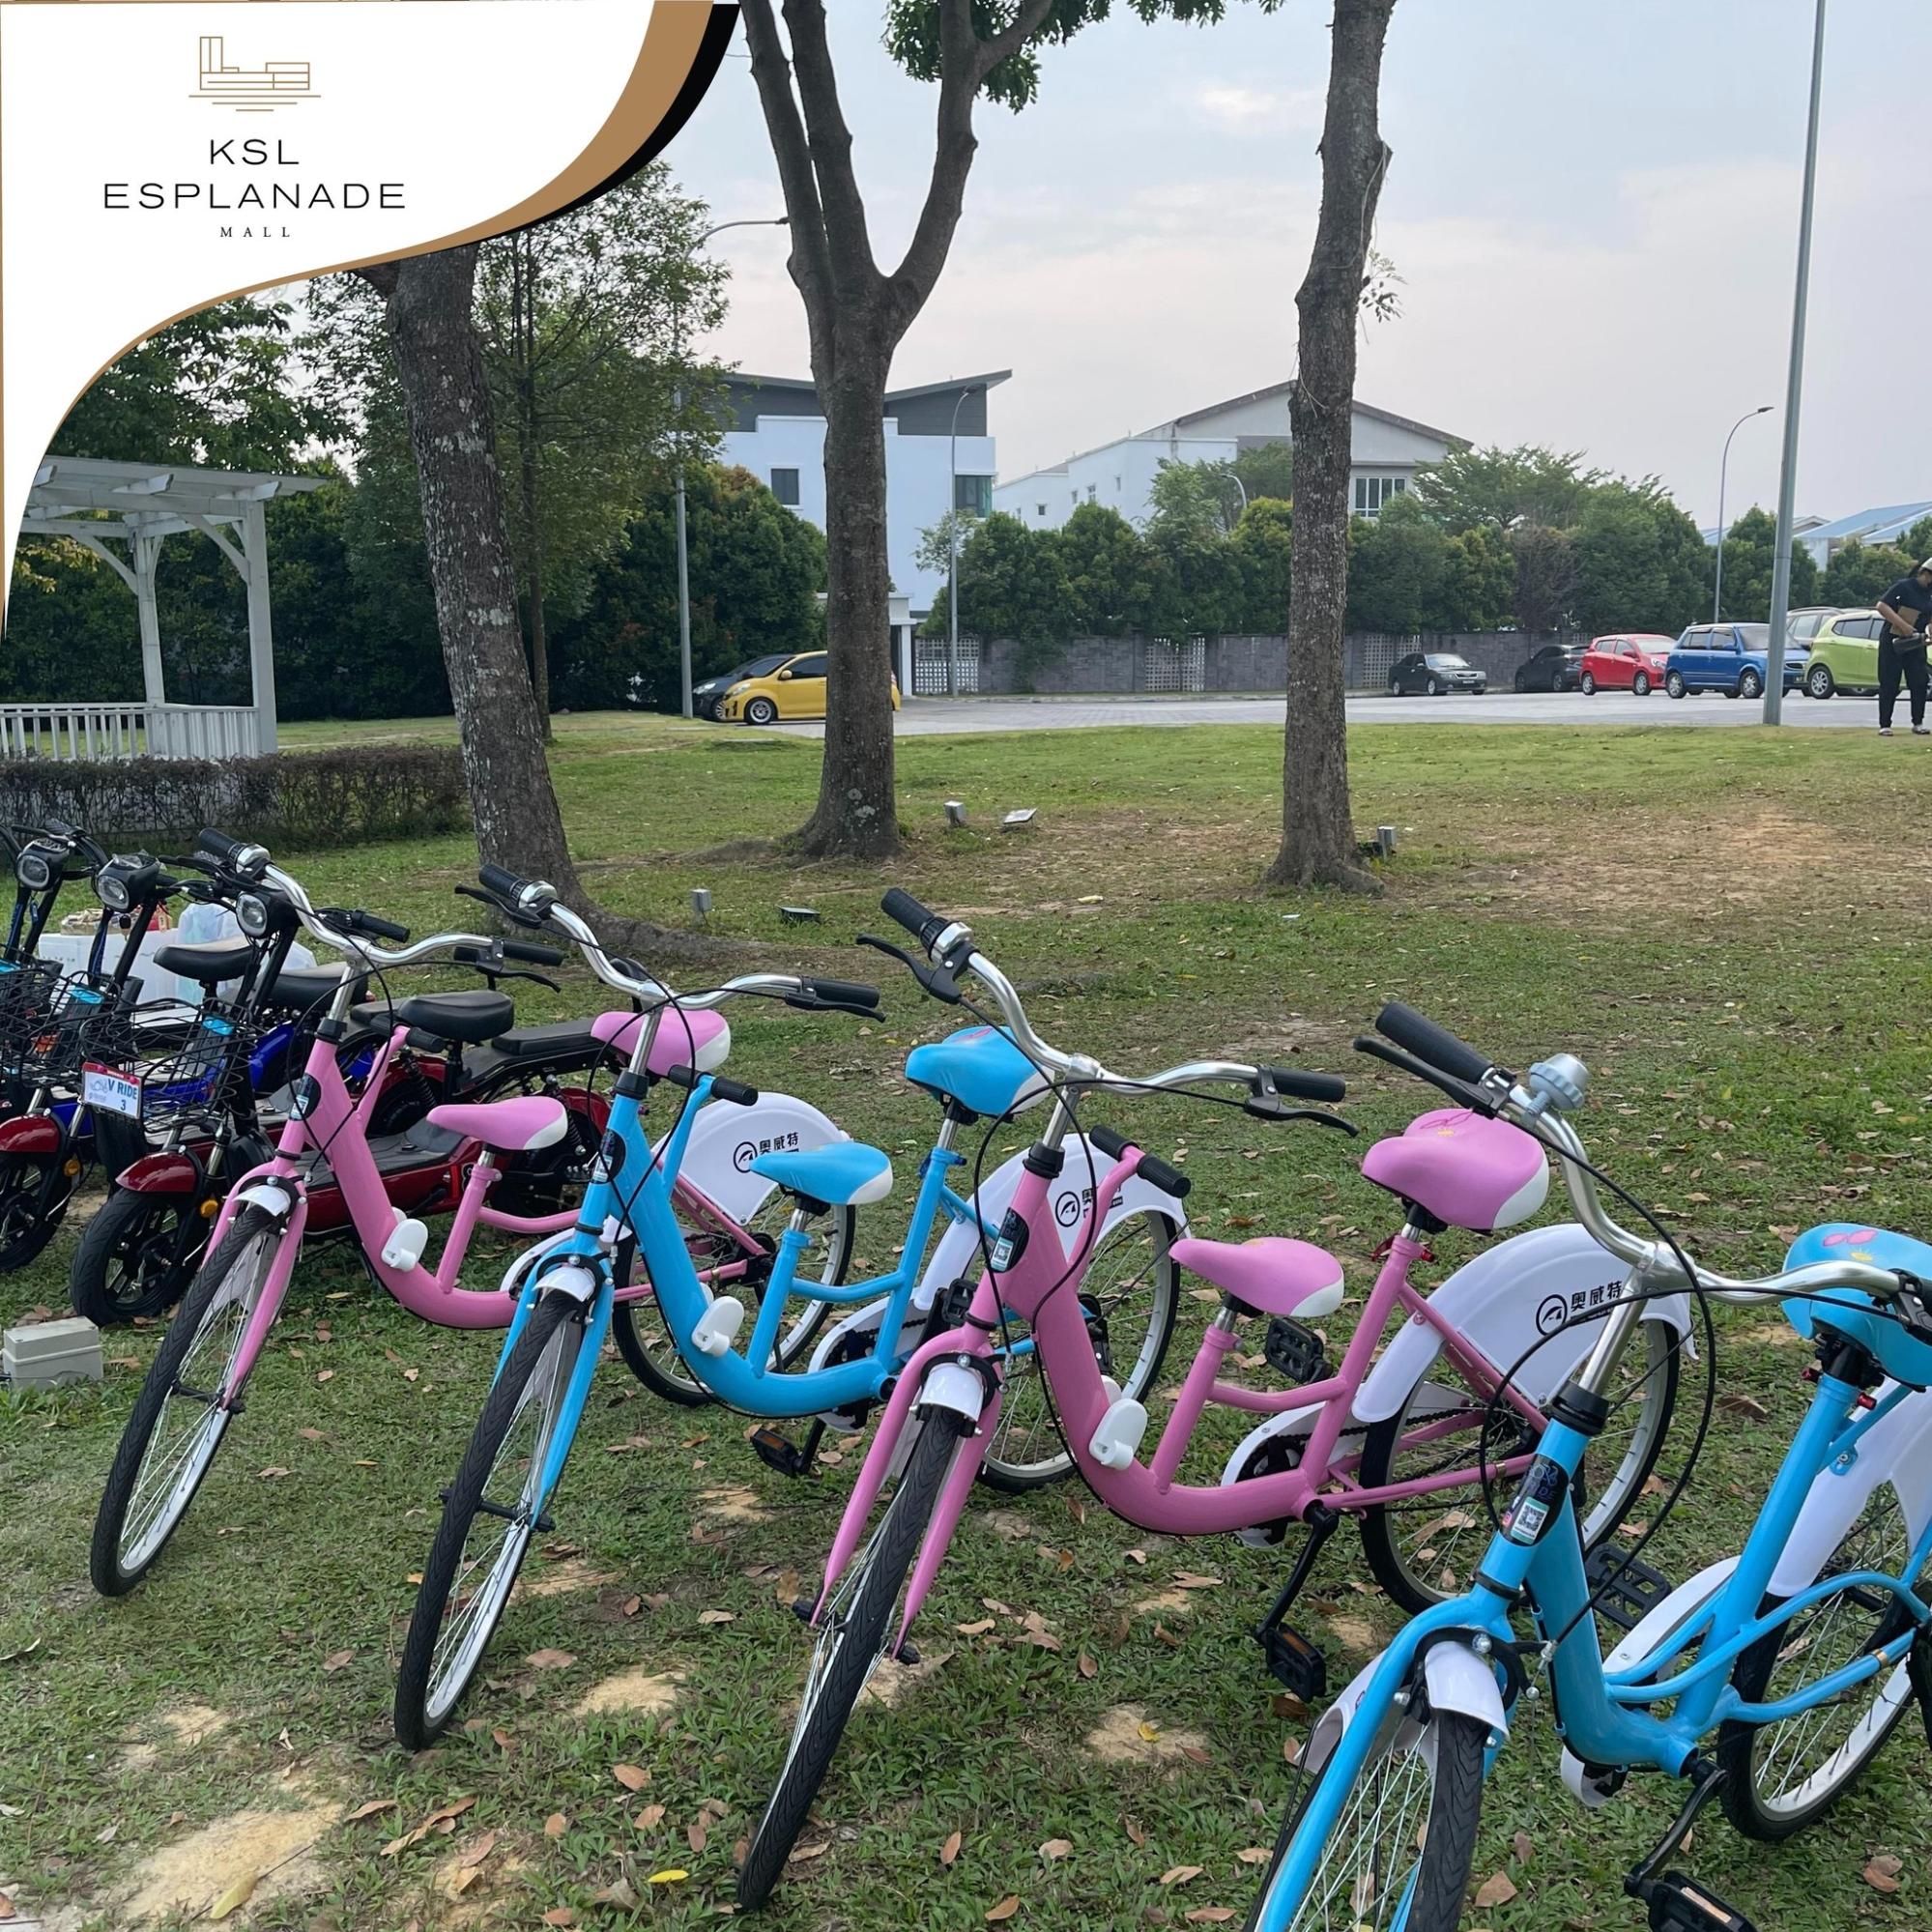 Rental bicycles - KSL Esplanade Mall opening in Klang